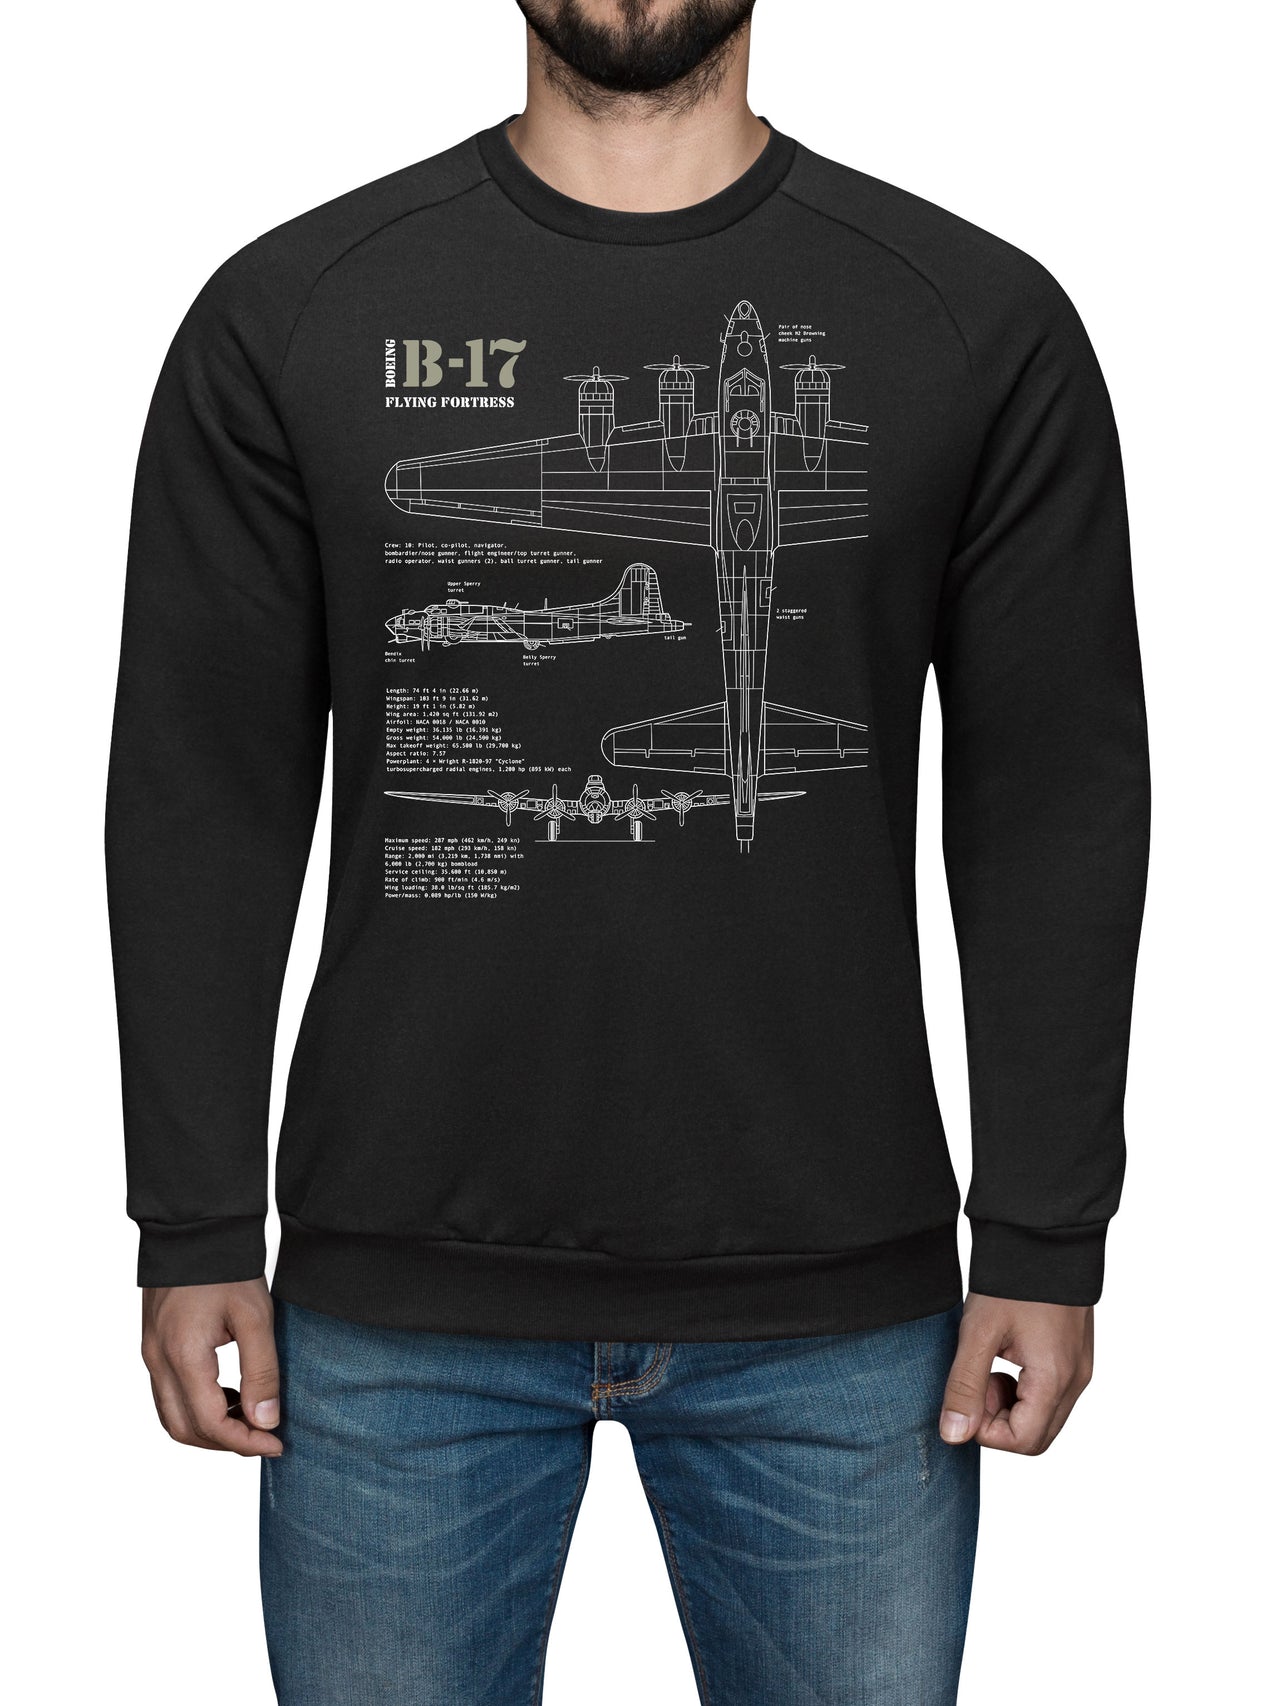 B-17 Flying Fortress - Sweat Shirt